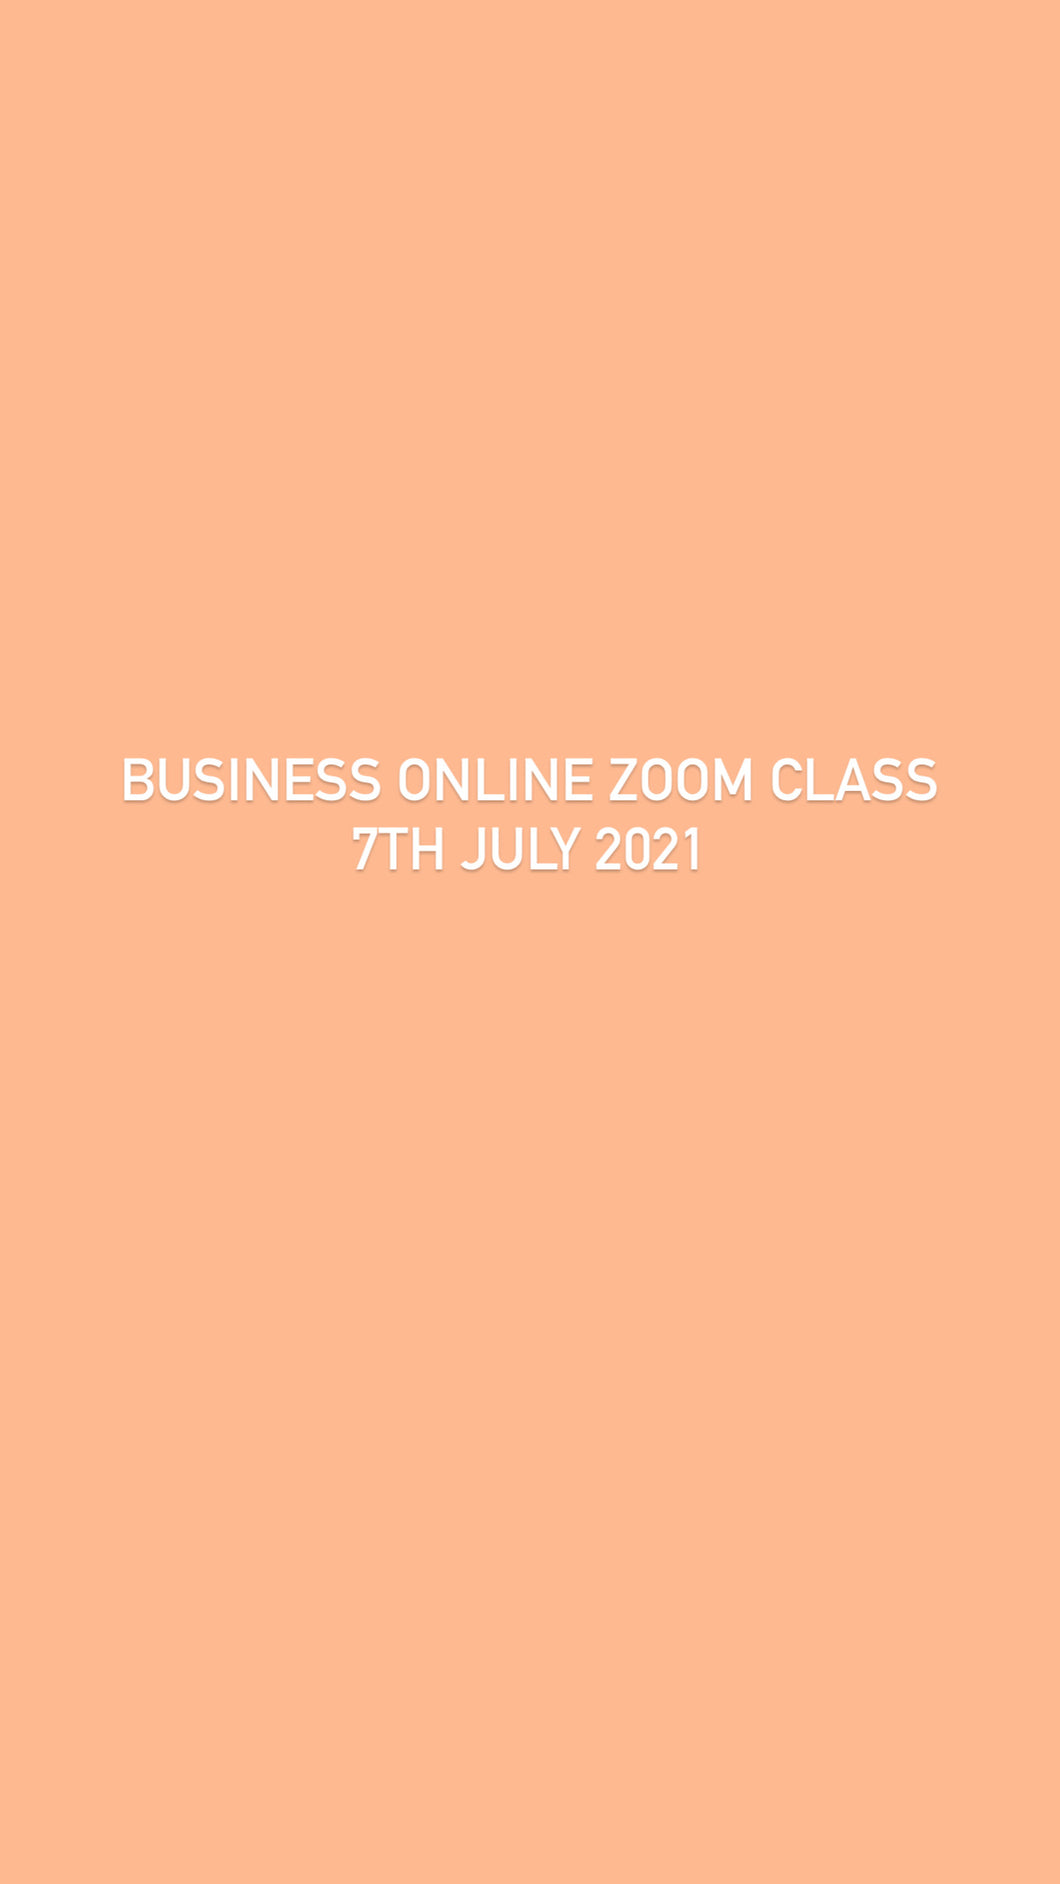 Business Online Zoom Class - The Lash Plug London